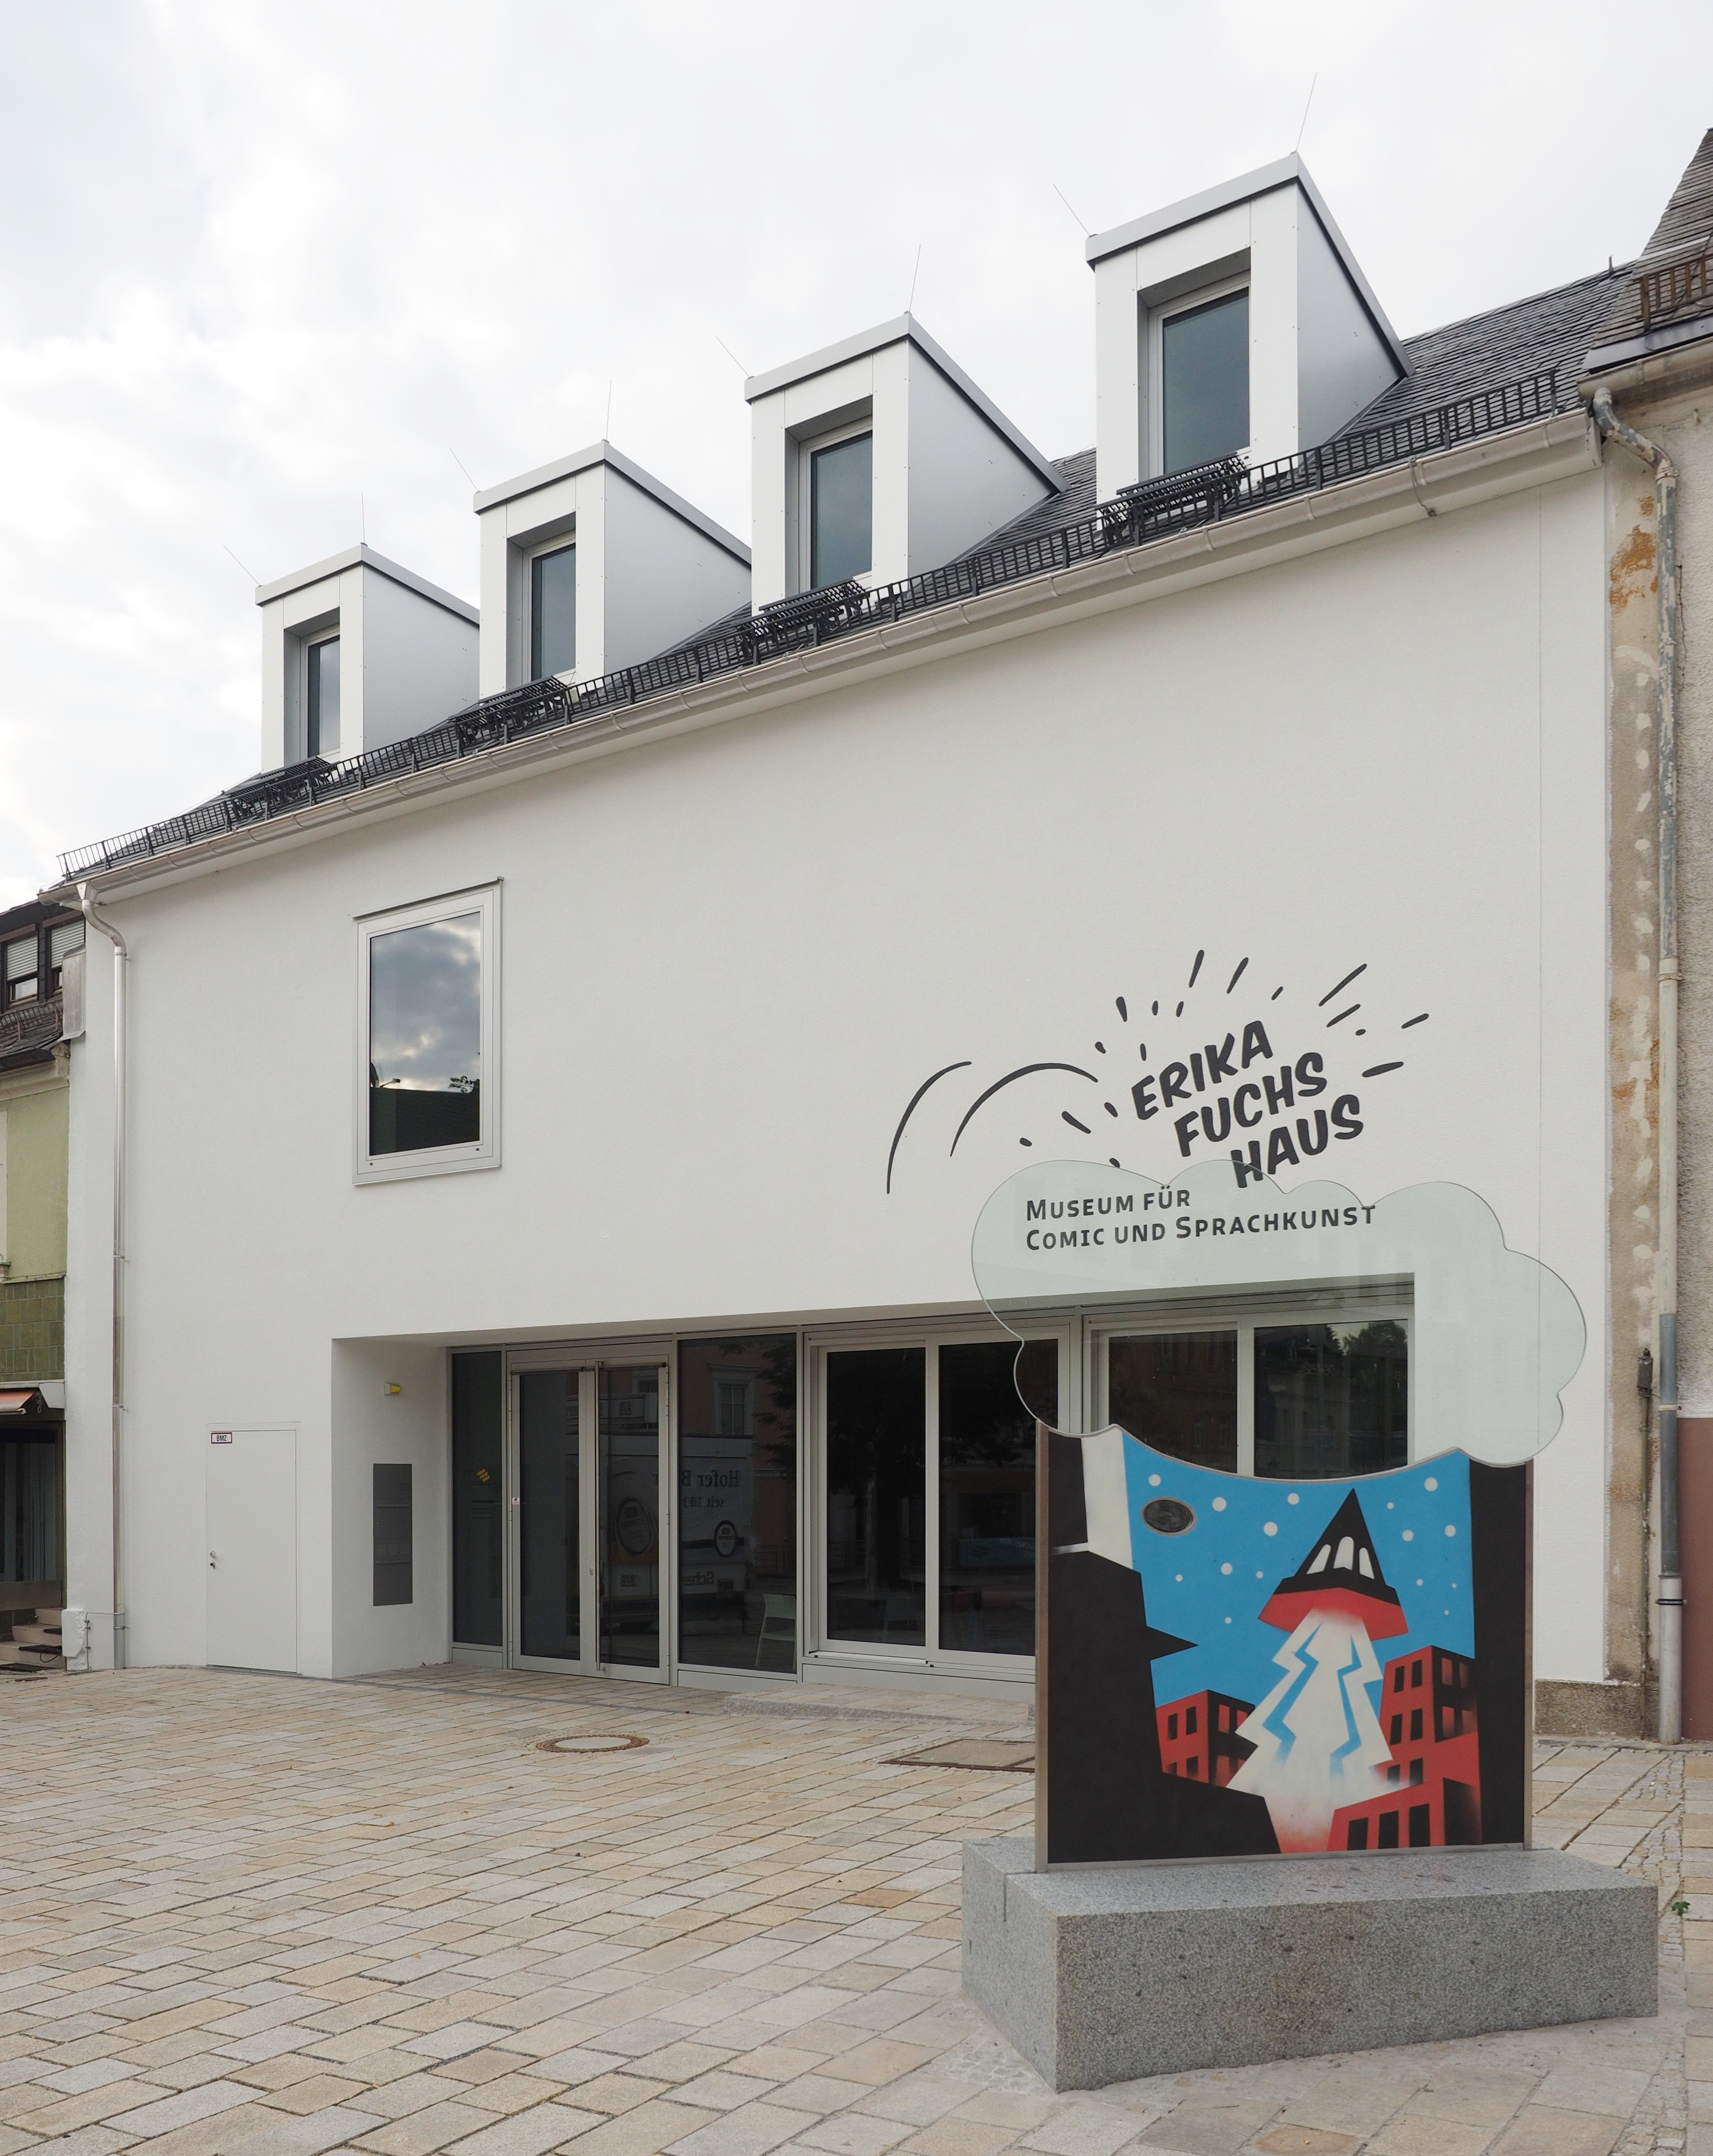 Erika Fuchs House museum of comics and language art, Schwarzenbach/Saale, Germany. Erika Fuchs was t...